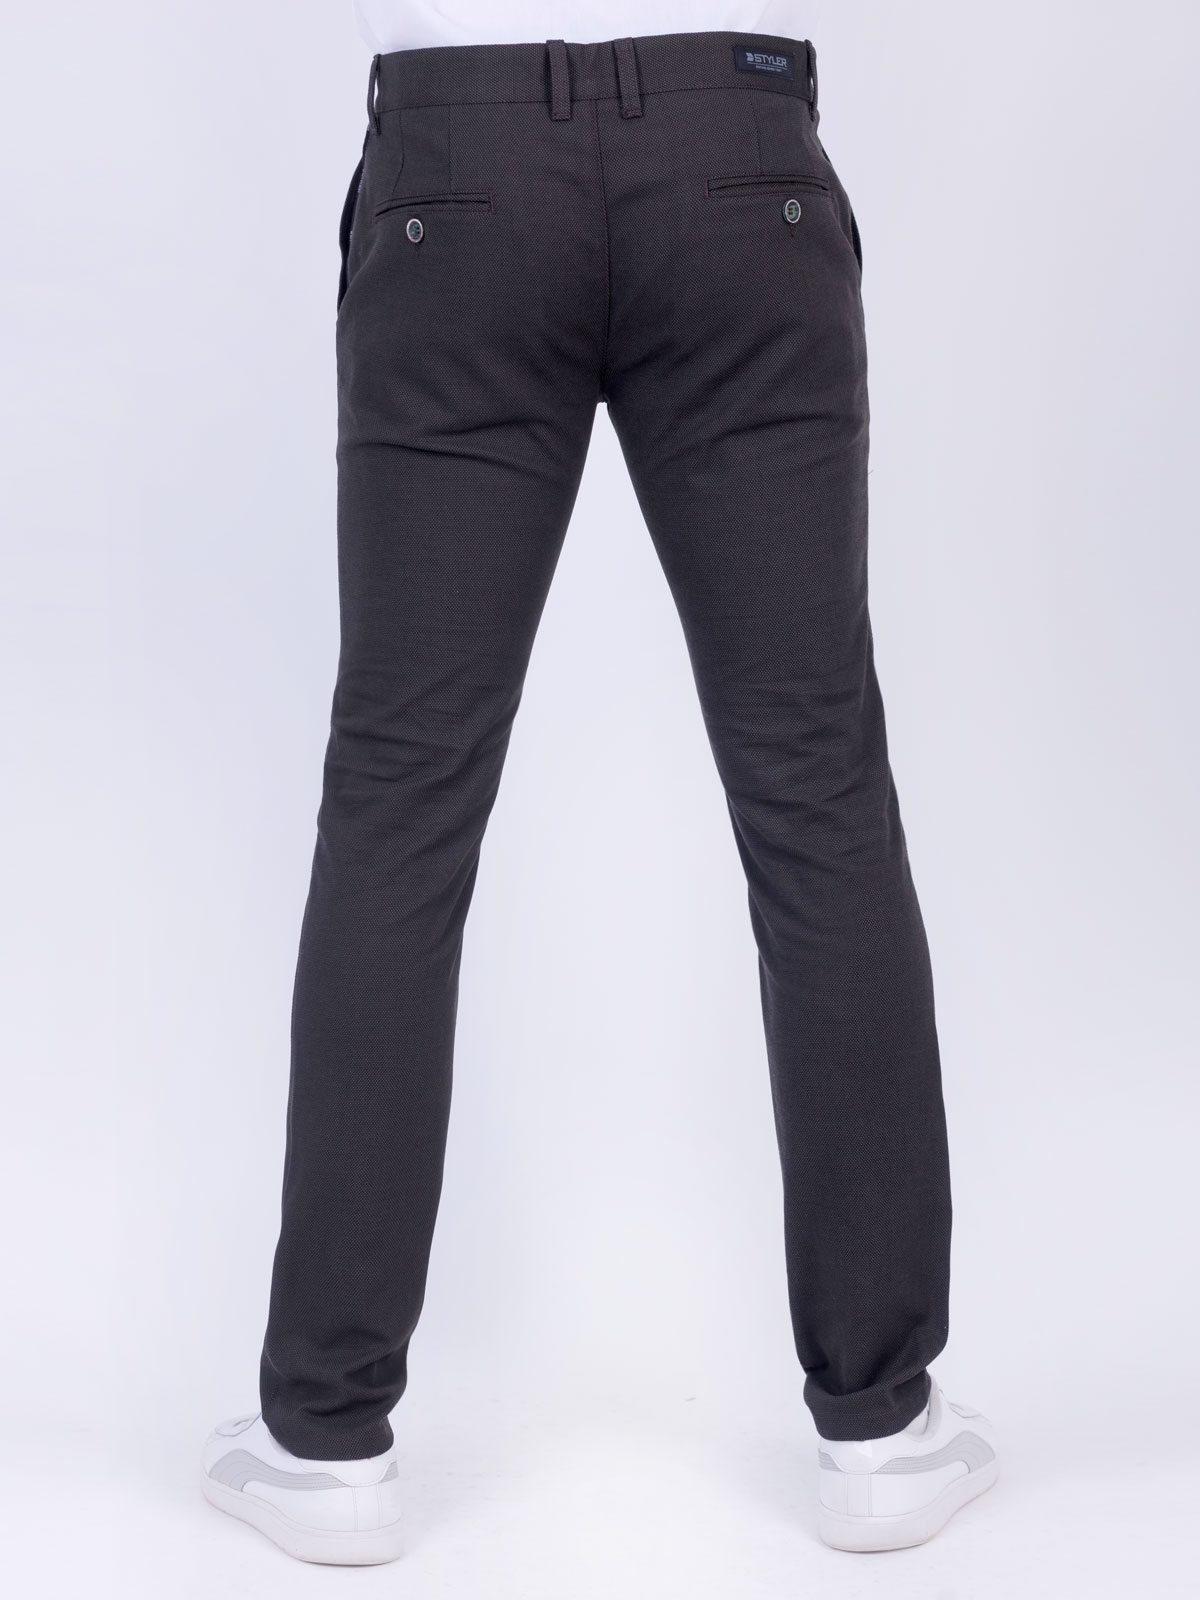 Pants in dark khaki color - 60303 € 66.37 img2